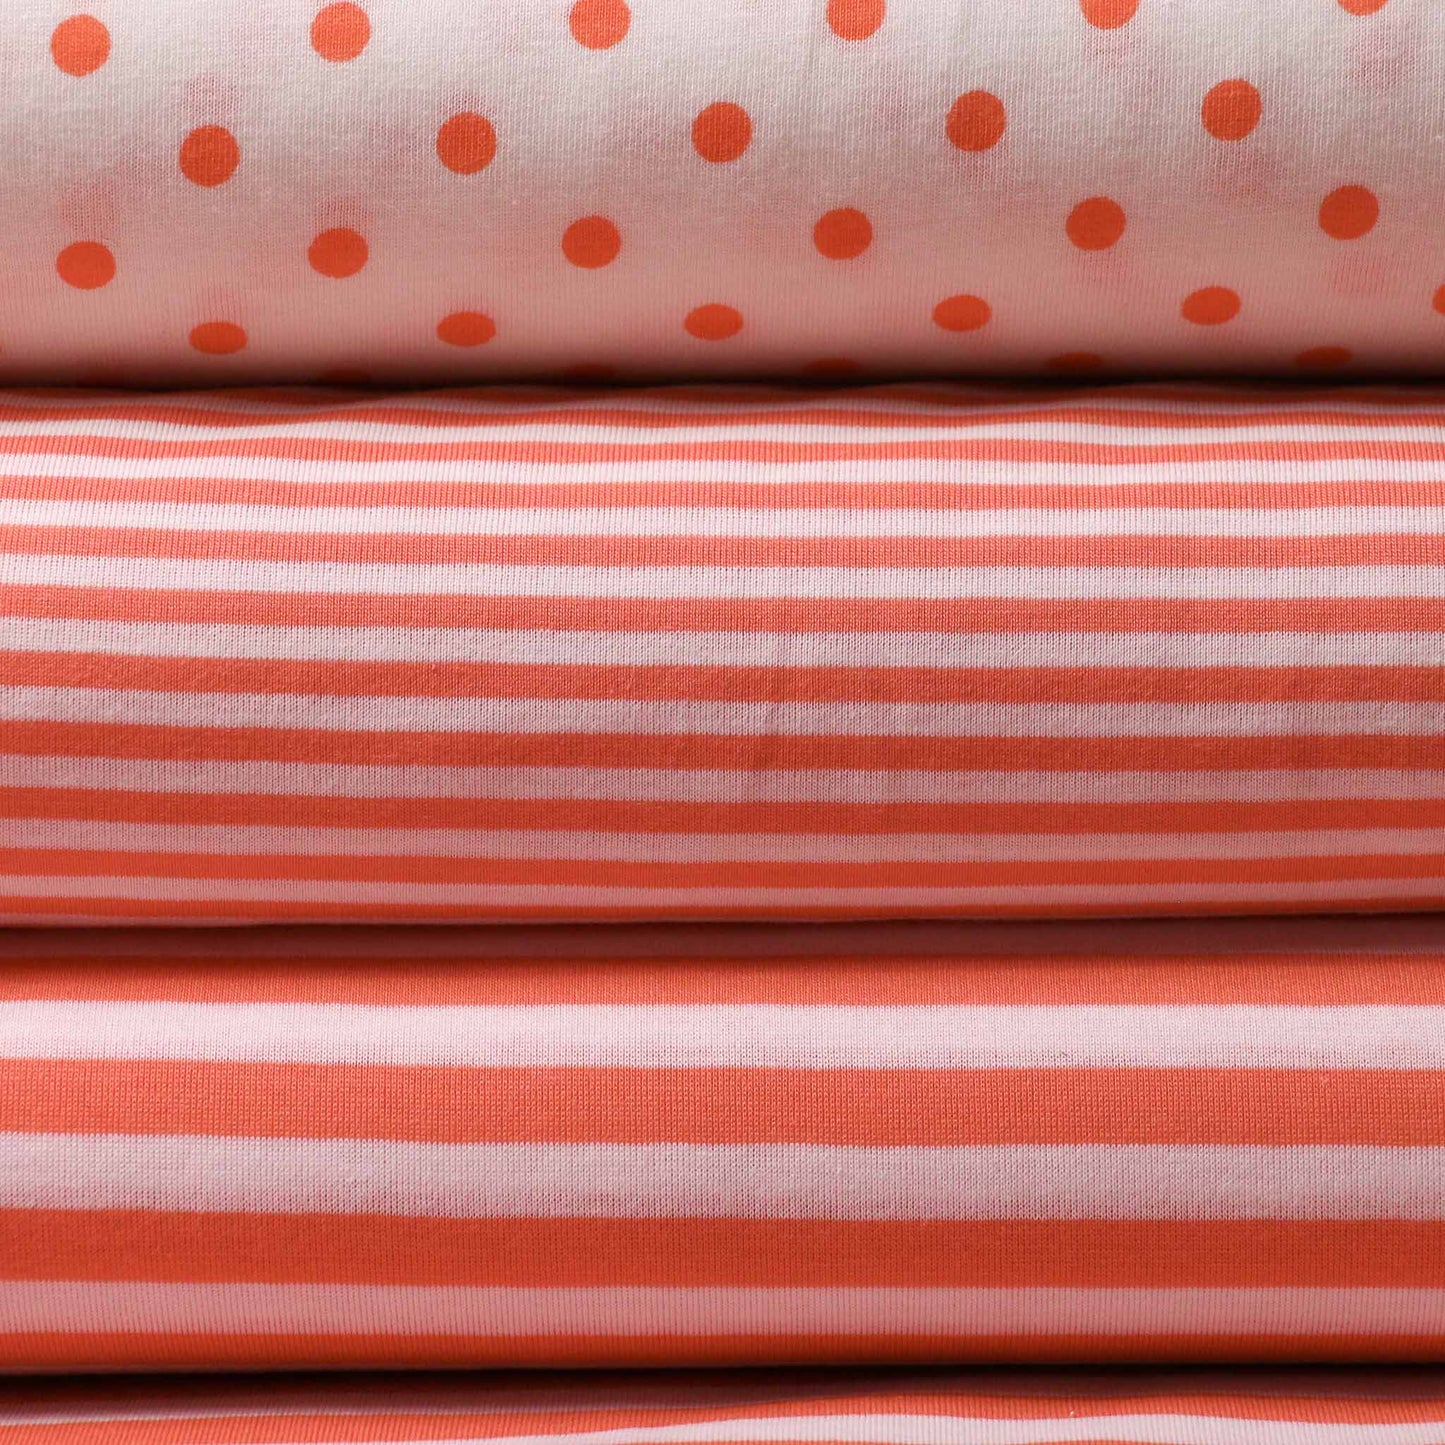 striped polkadot white and orange jersey dressmaking fabric